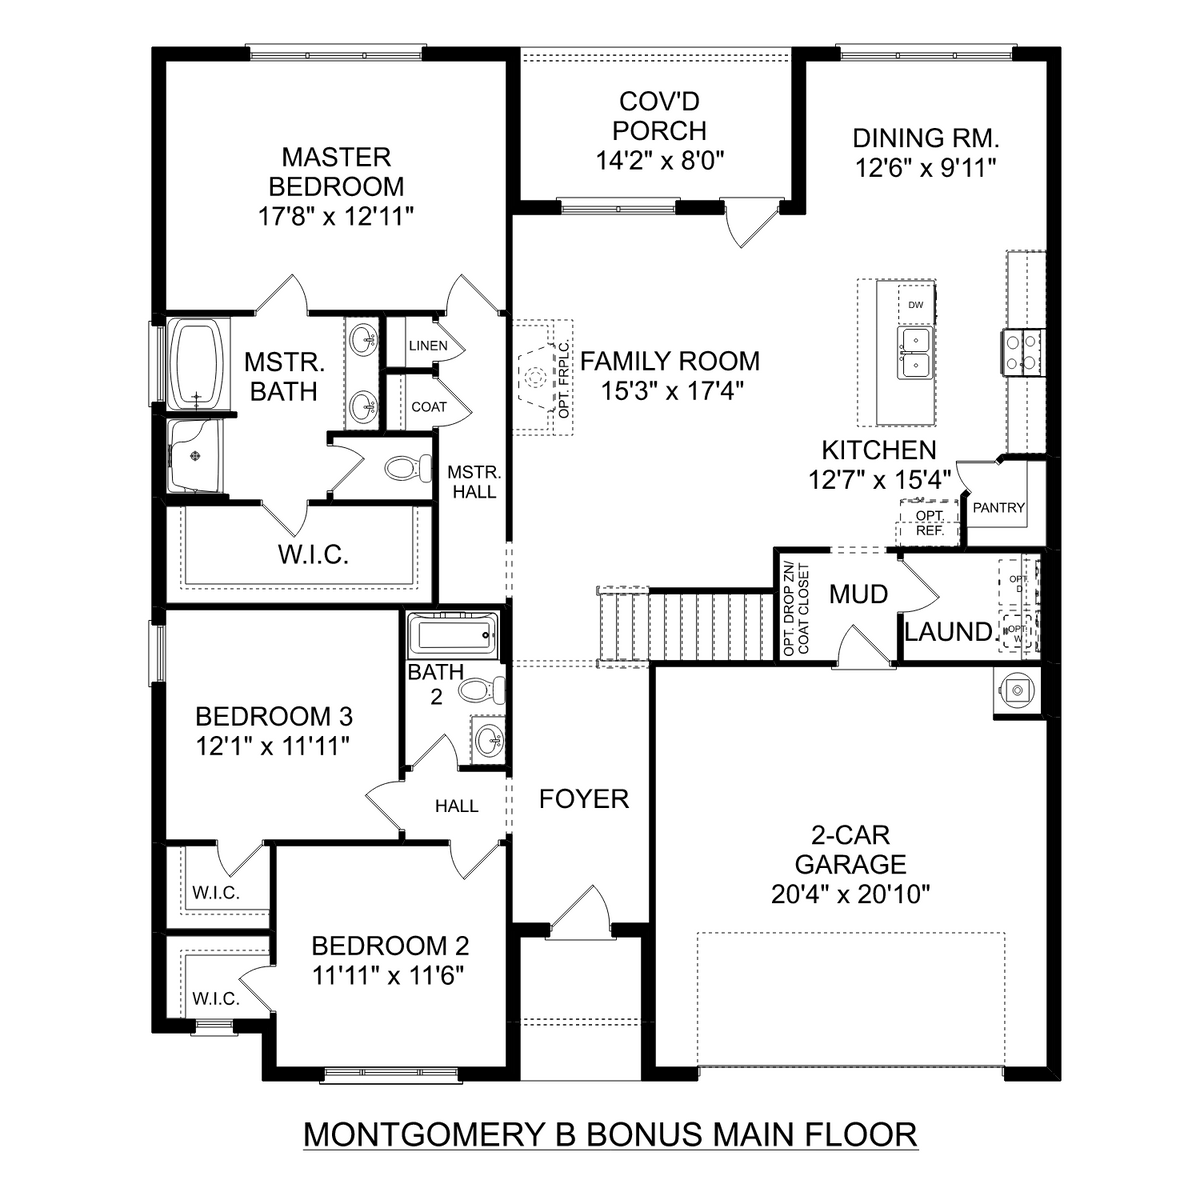 1 - The Montgomery B With Bonus buildable floor plan layout in Davidson Homes' Barnett's Crossing community.